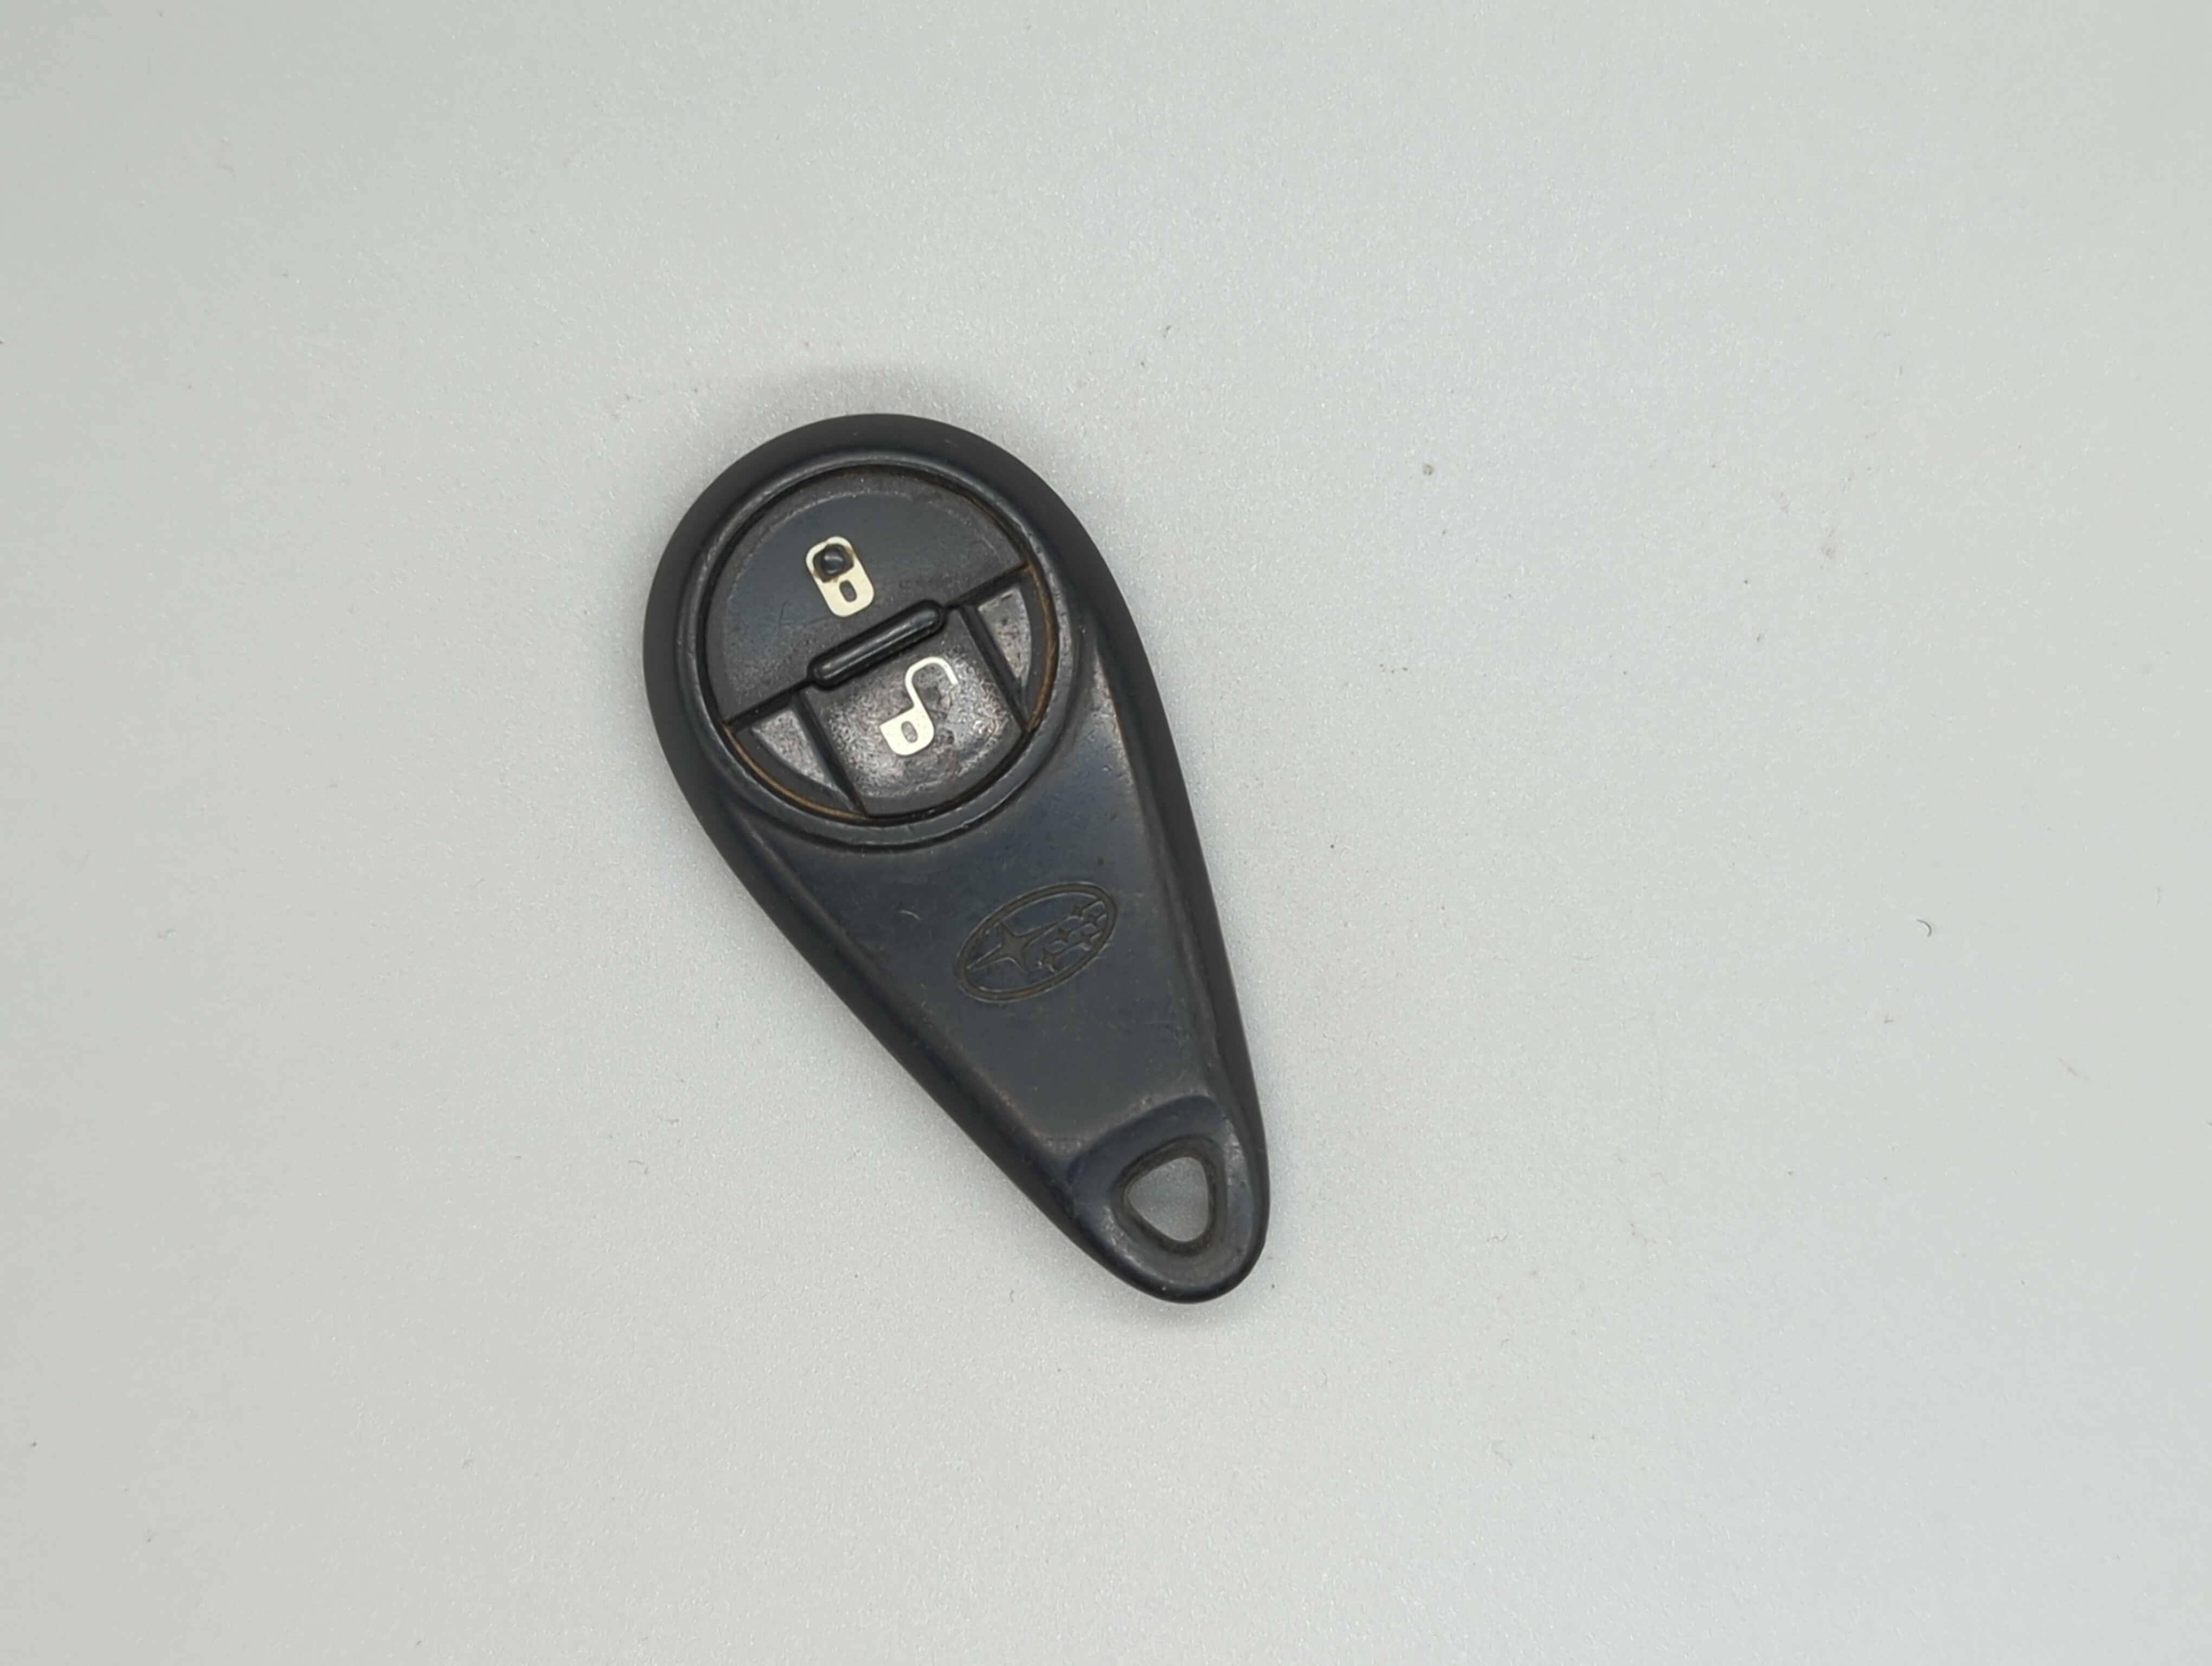 Subaru Impreza Keyless Entry Remote Fob NHVWB1U711 2 buttons - Oemusedautoparts1.com